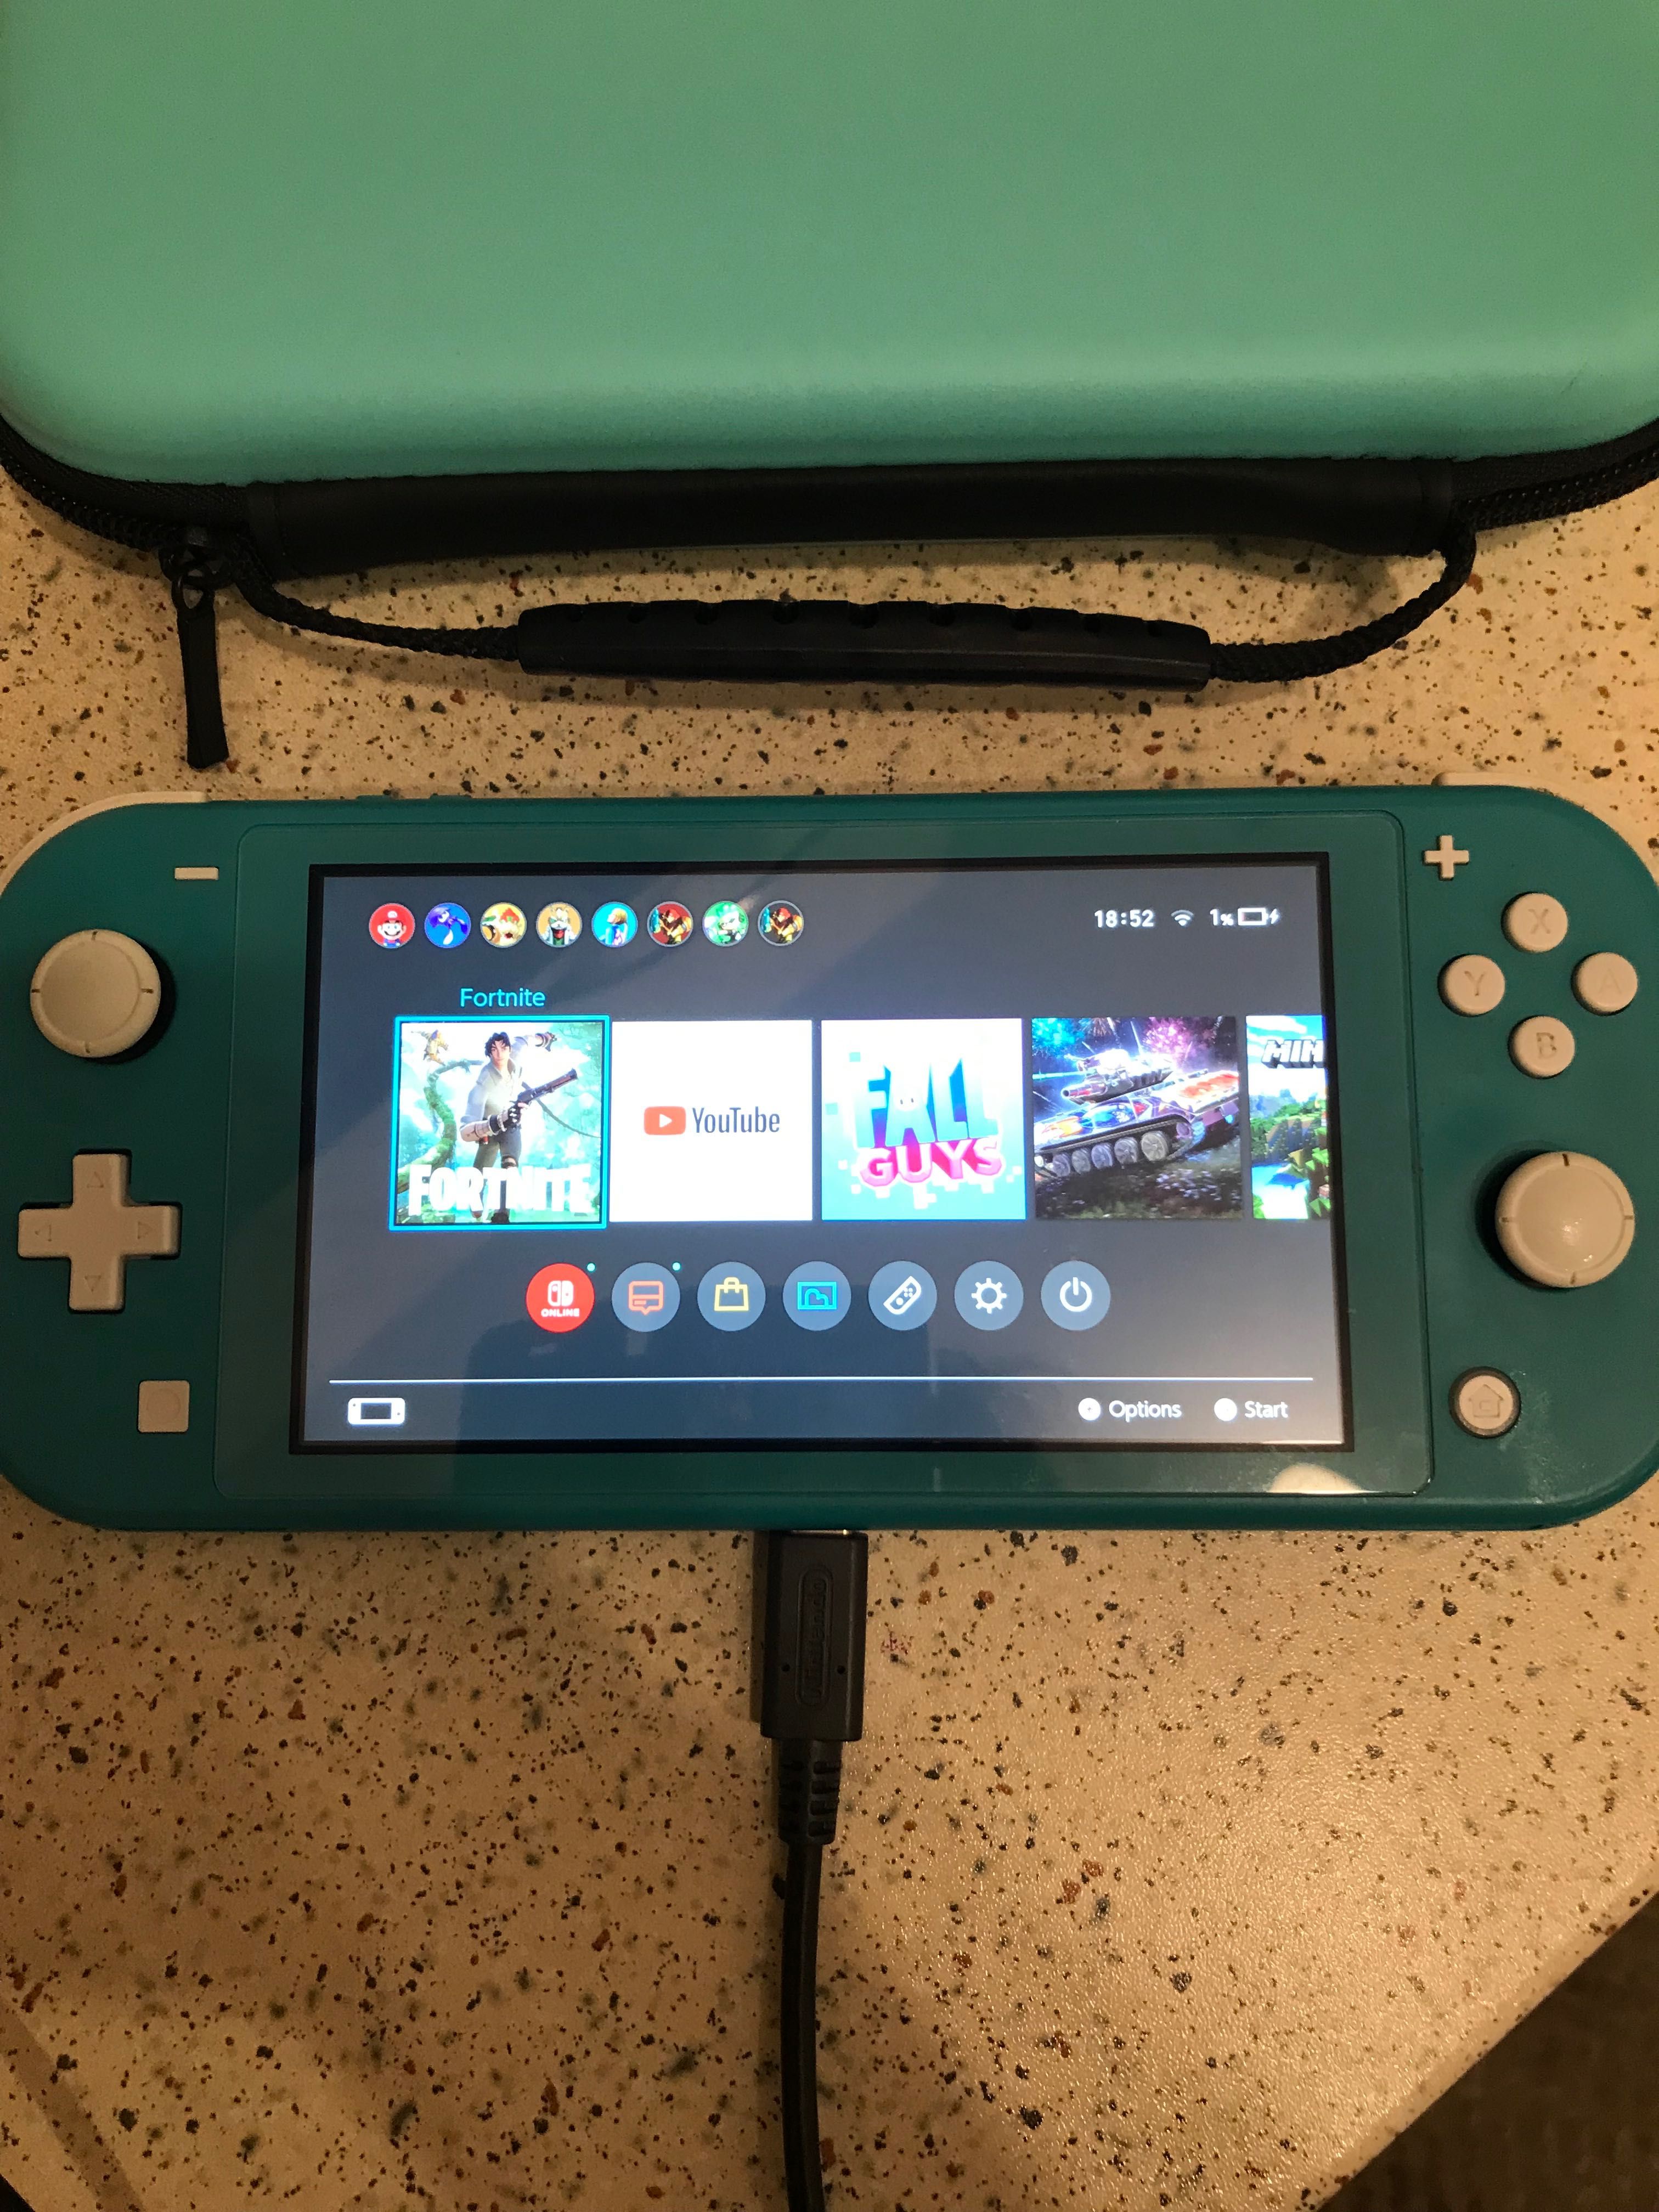 Nintendo Switch Lite
Тюркоаз